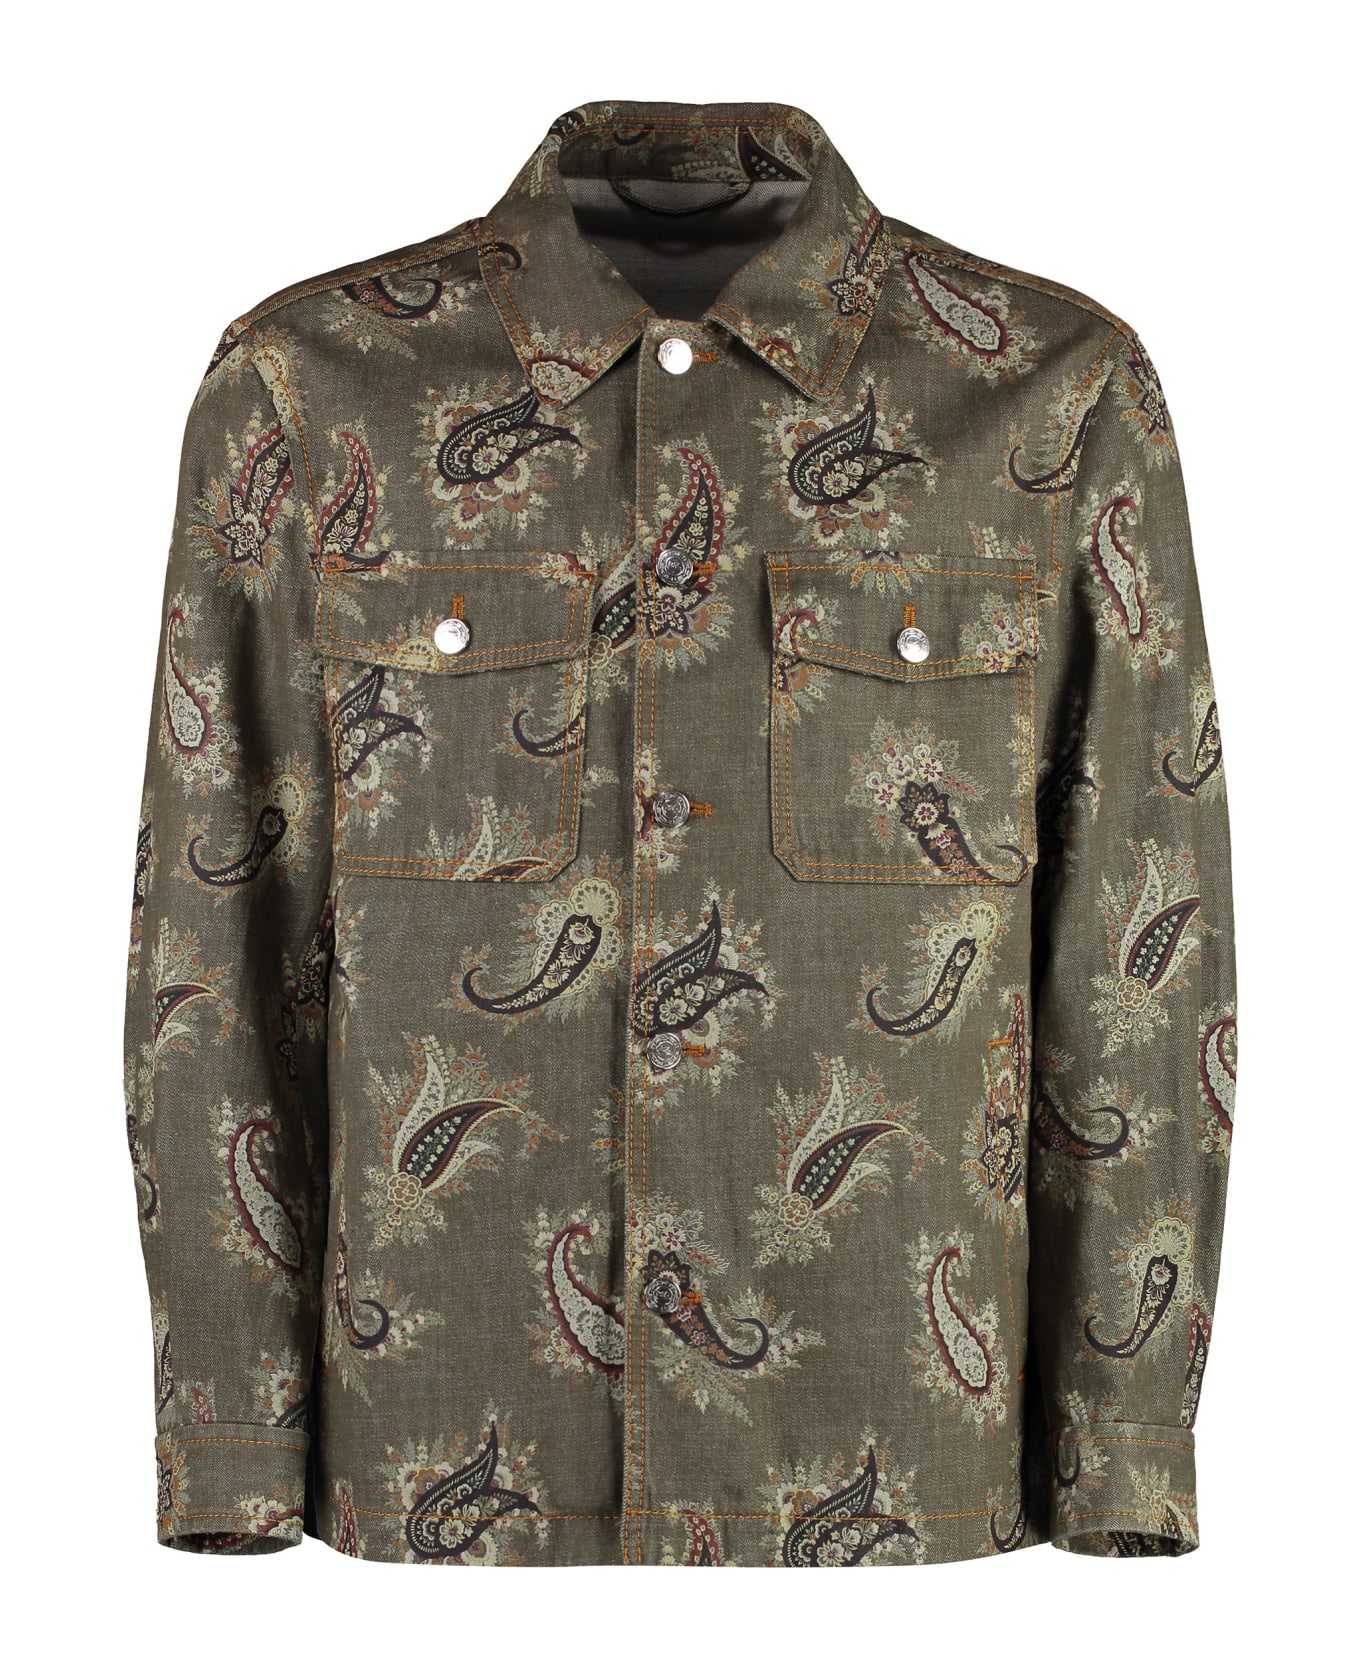 Etro Jacquard Cotton Jacket - khaki